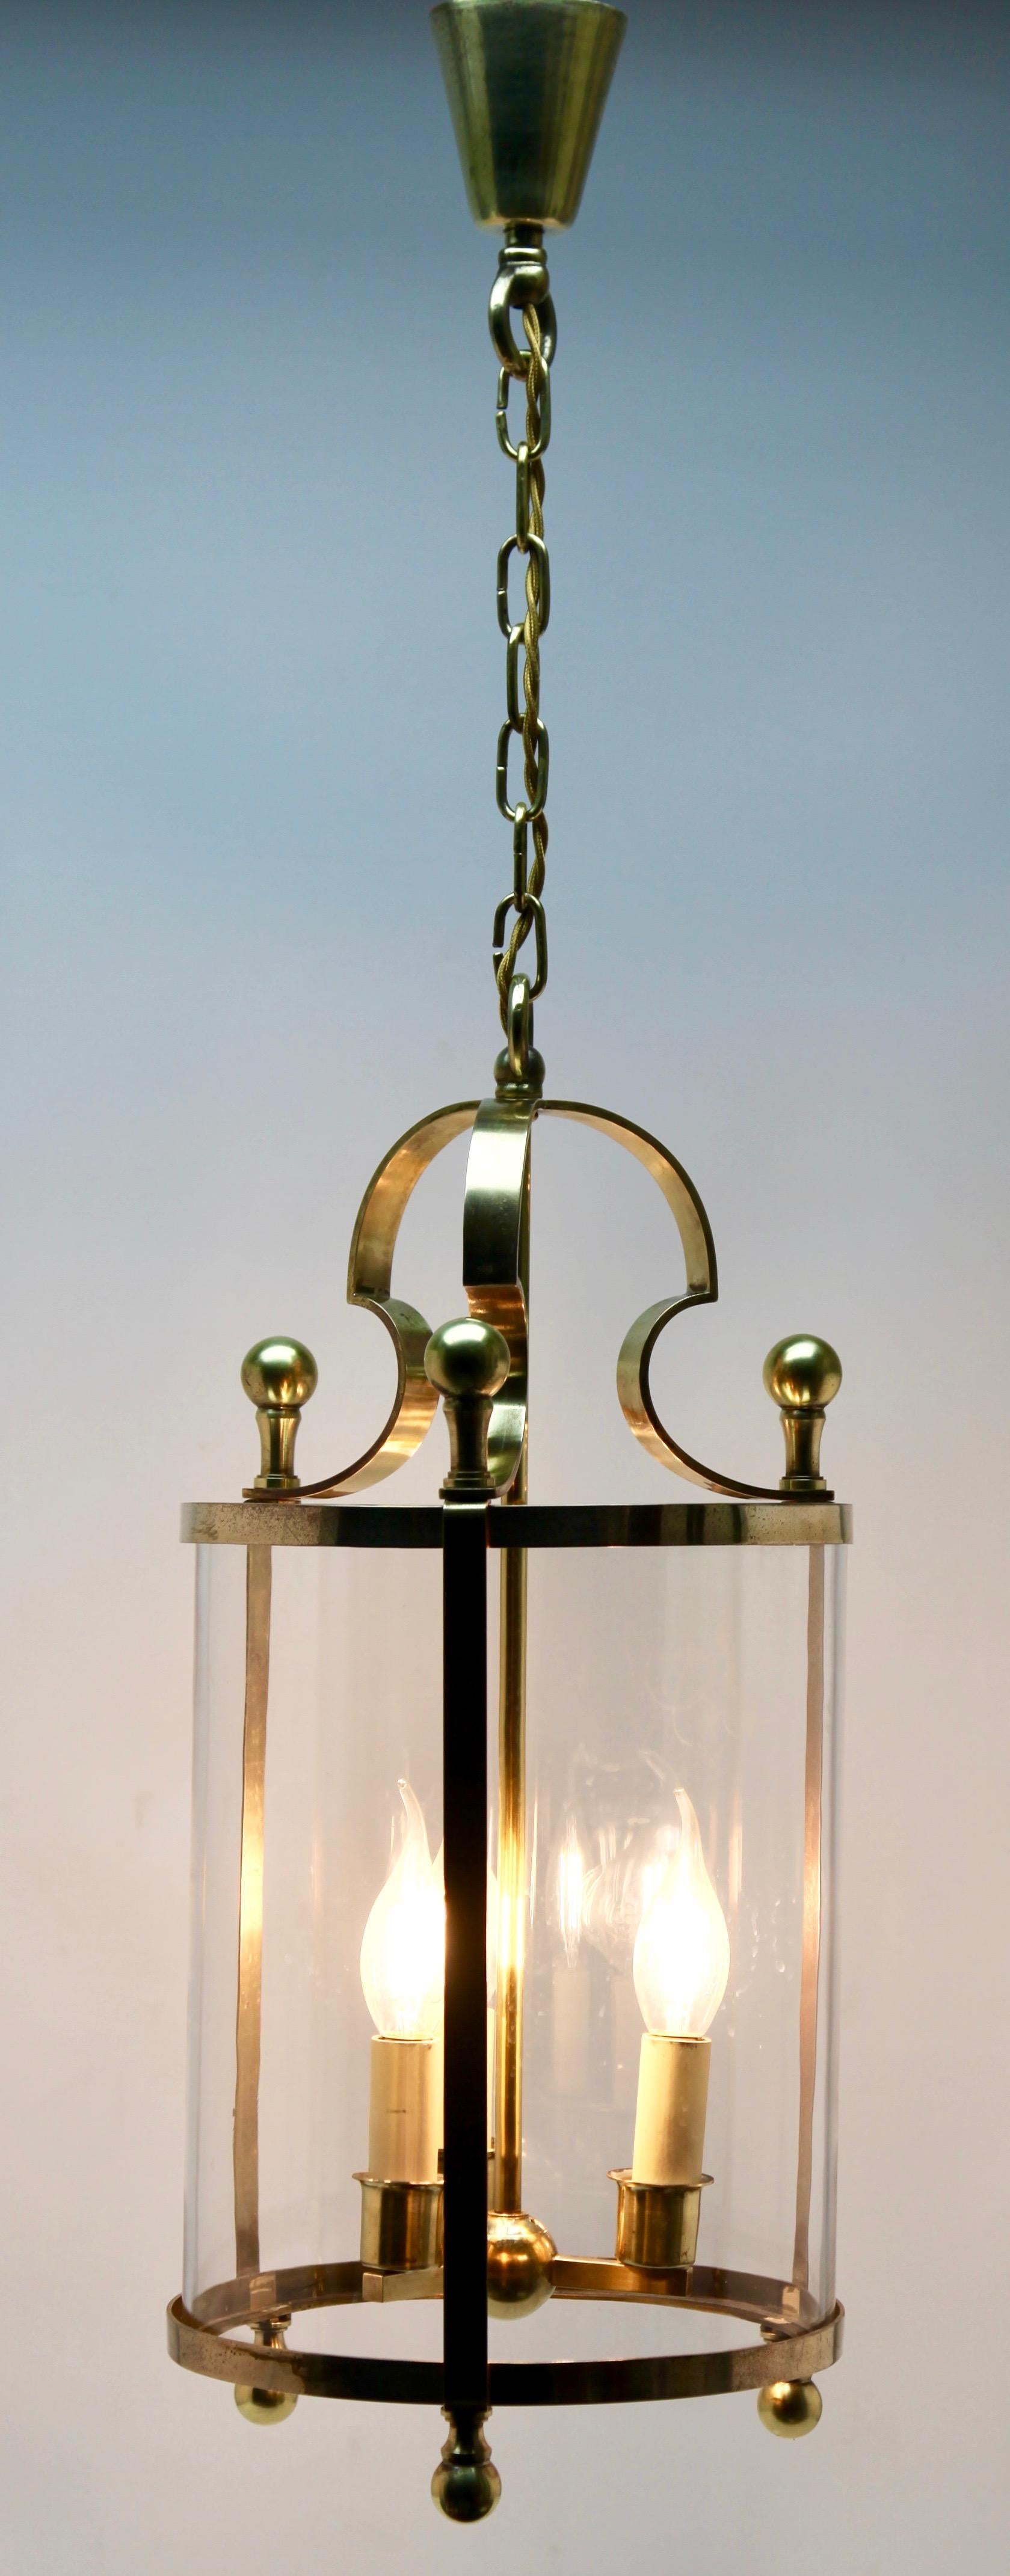 Beautiful solid brass lantern or pendant lamp made in the style of the Italian designer Gaetano Sciolari, circa 1960-1970, Rome, Italy. The fabulous of vintage light takes three E14 European standard screw bulbs to illuminate. The lantern looks like